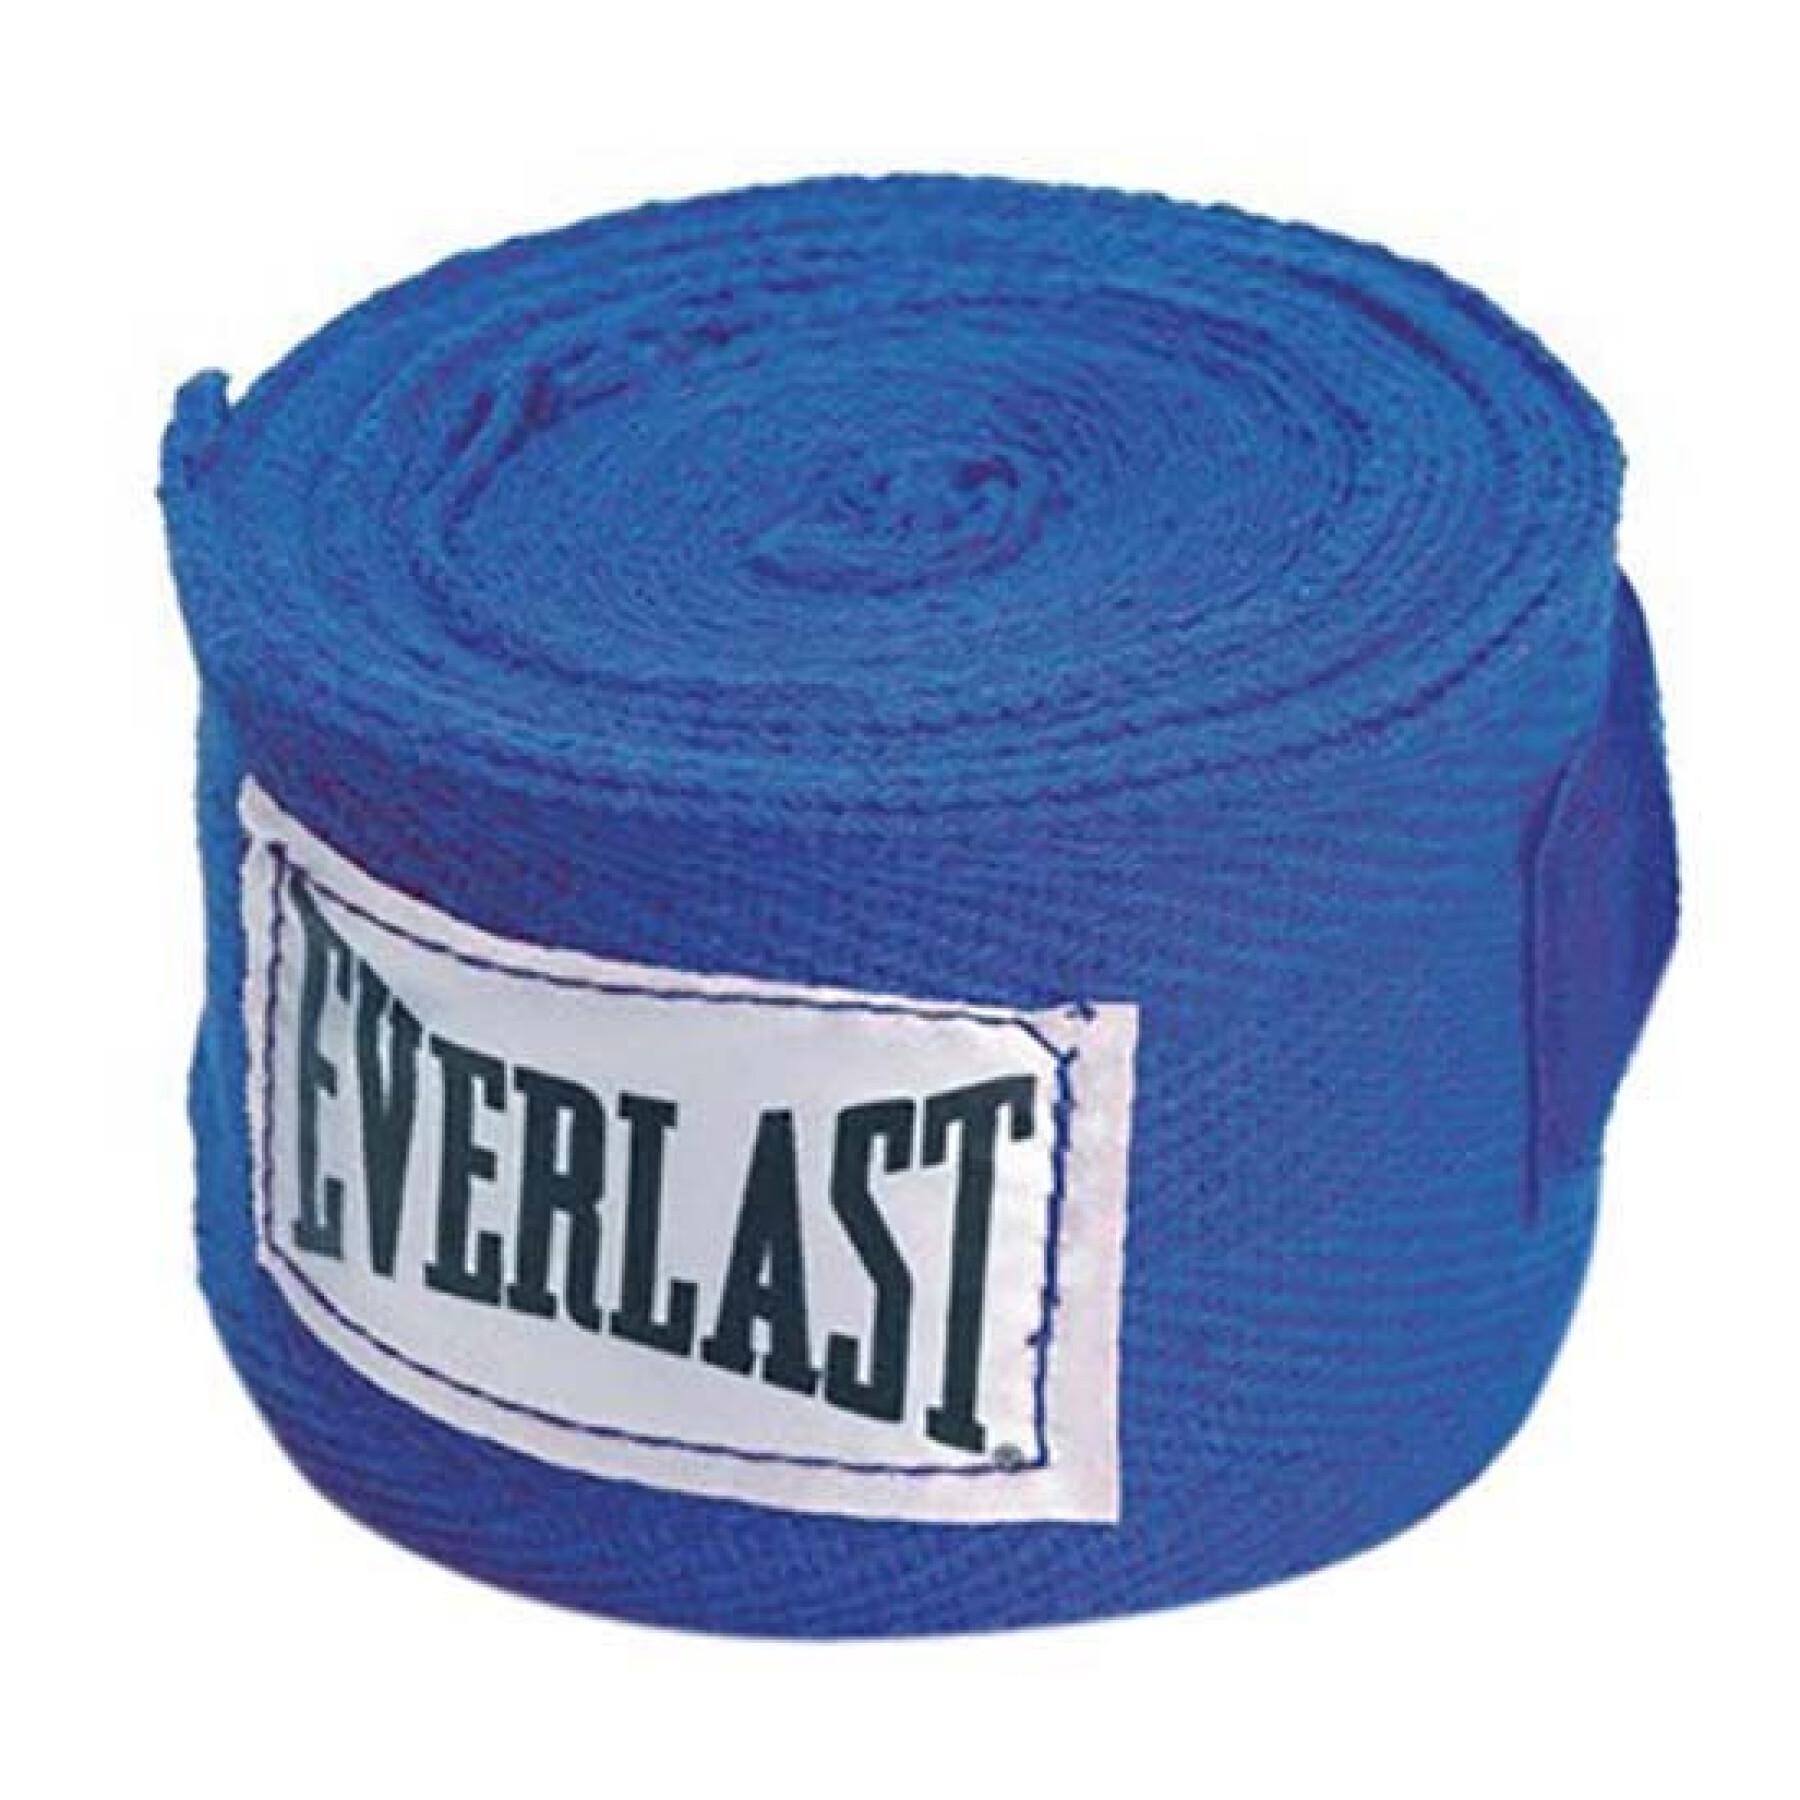 Handskydd Everlast bleu